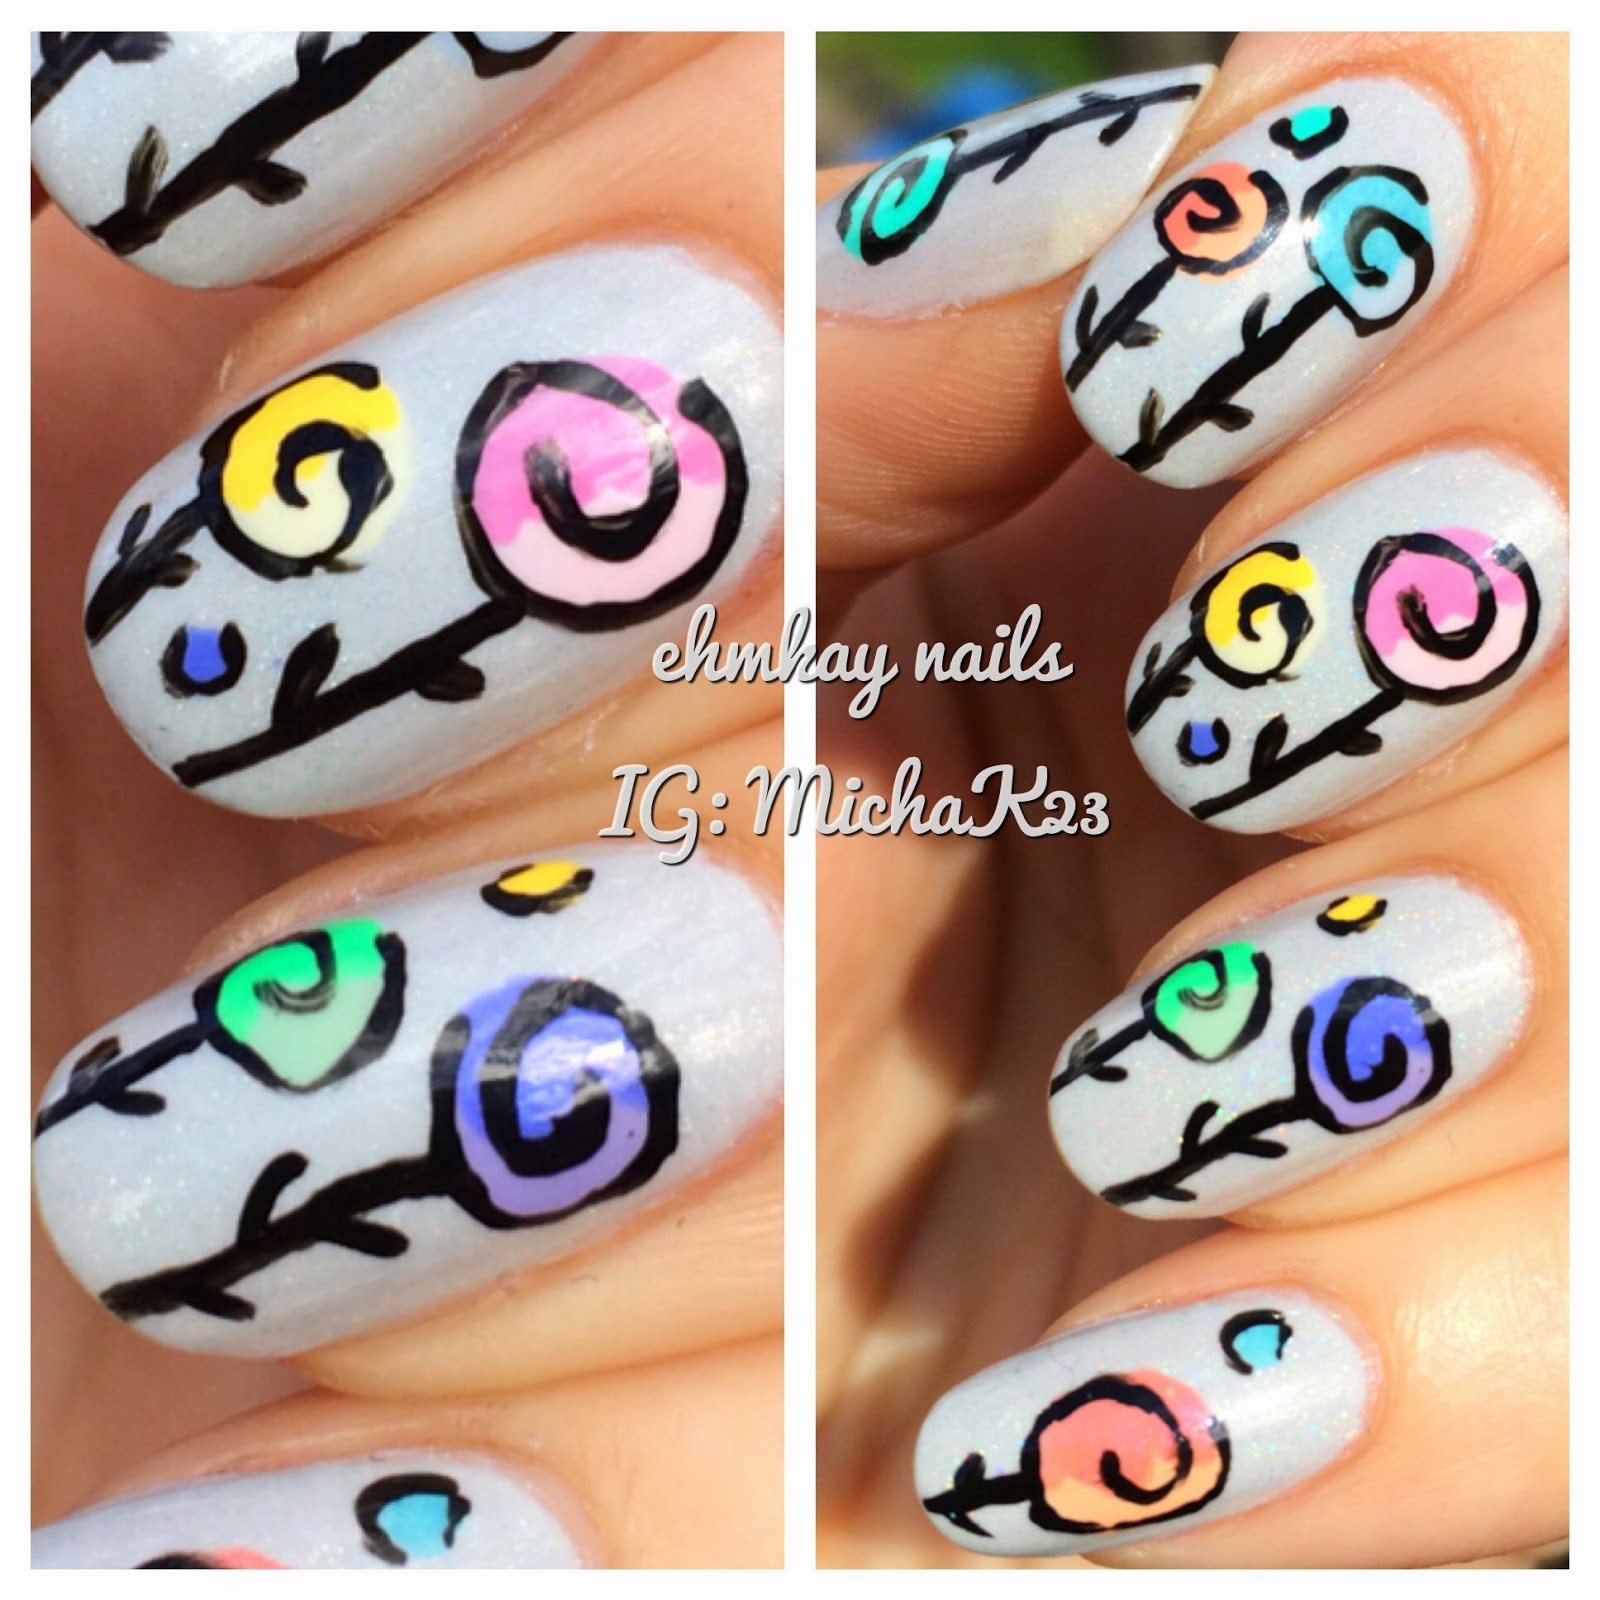 ehmkay nails: Whimsical Lollipop Flowers Nail Art